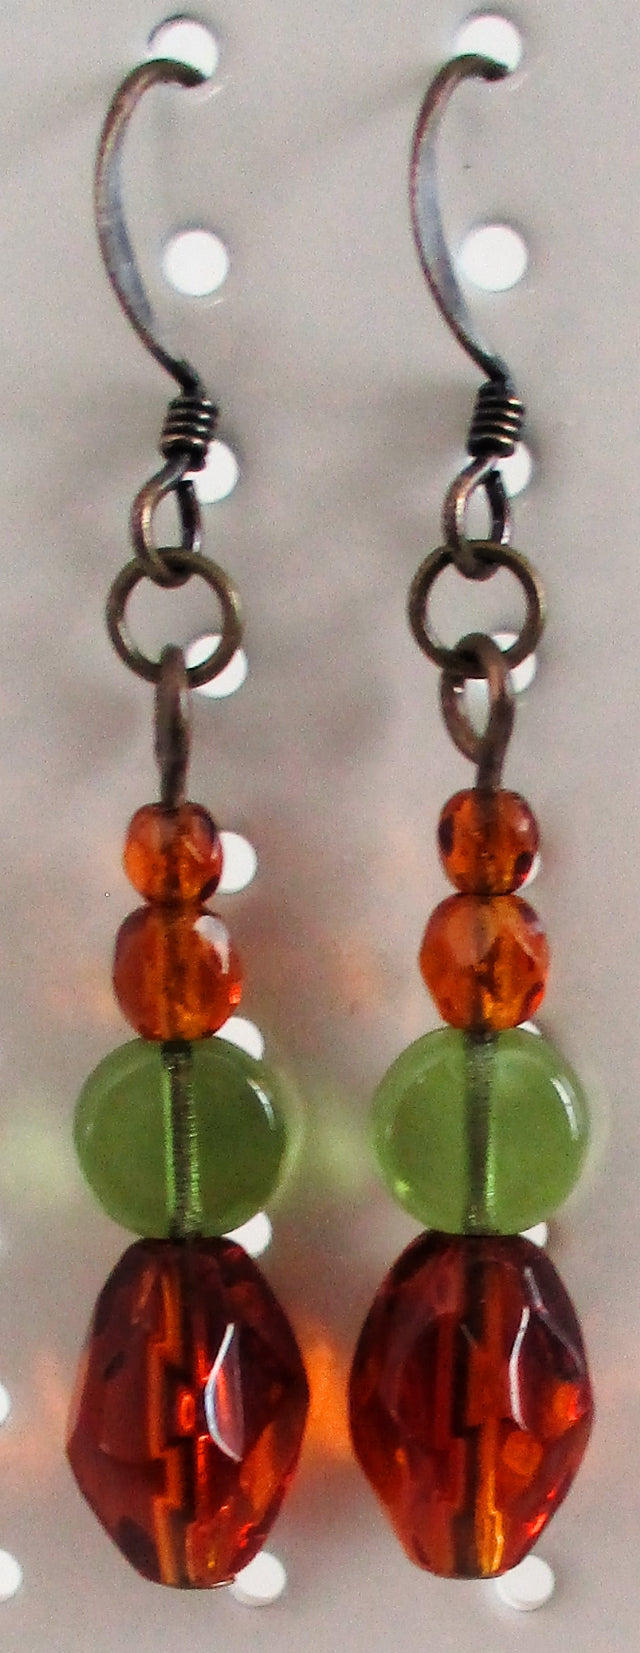 green & brown earrings - juicybeads jewelry